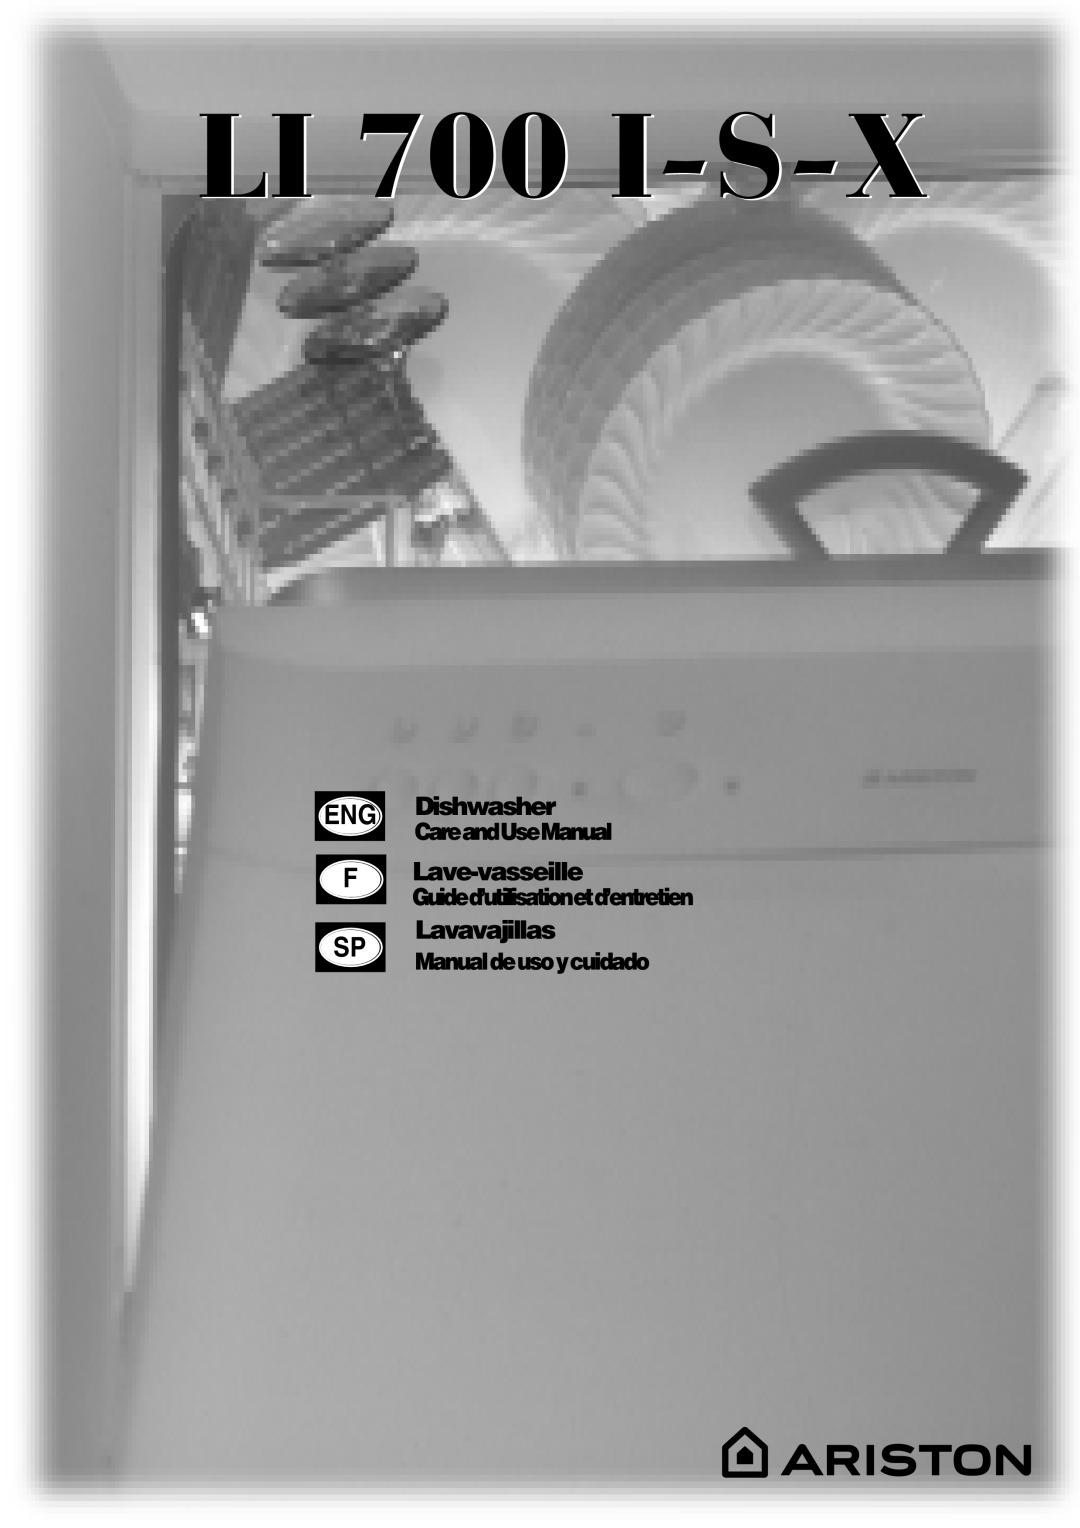 Ariston LI 700 I-S-X manual CareandUseManual, Guided’utilisationetd’entretien, Manualdeusoycuidado, Eng F Sp, Dishwasher 